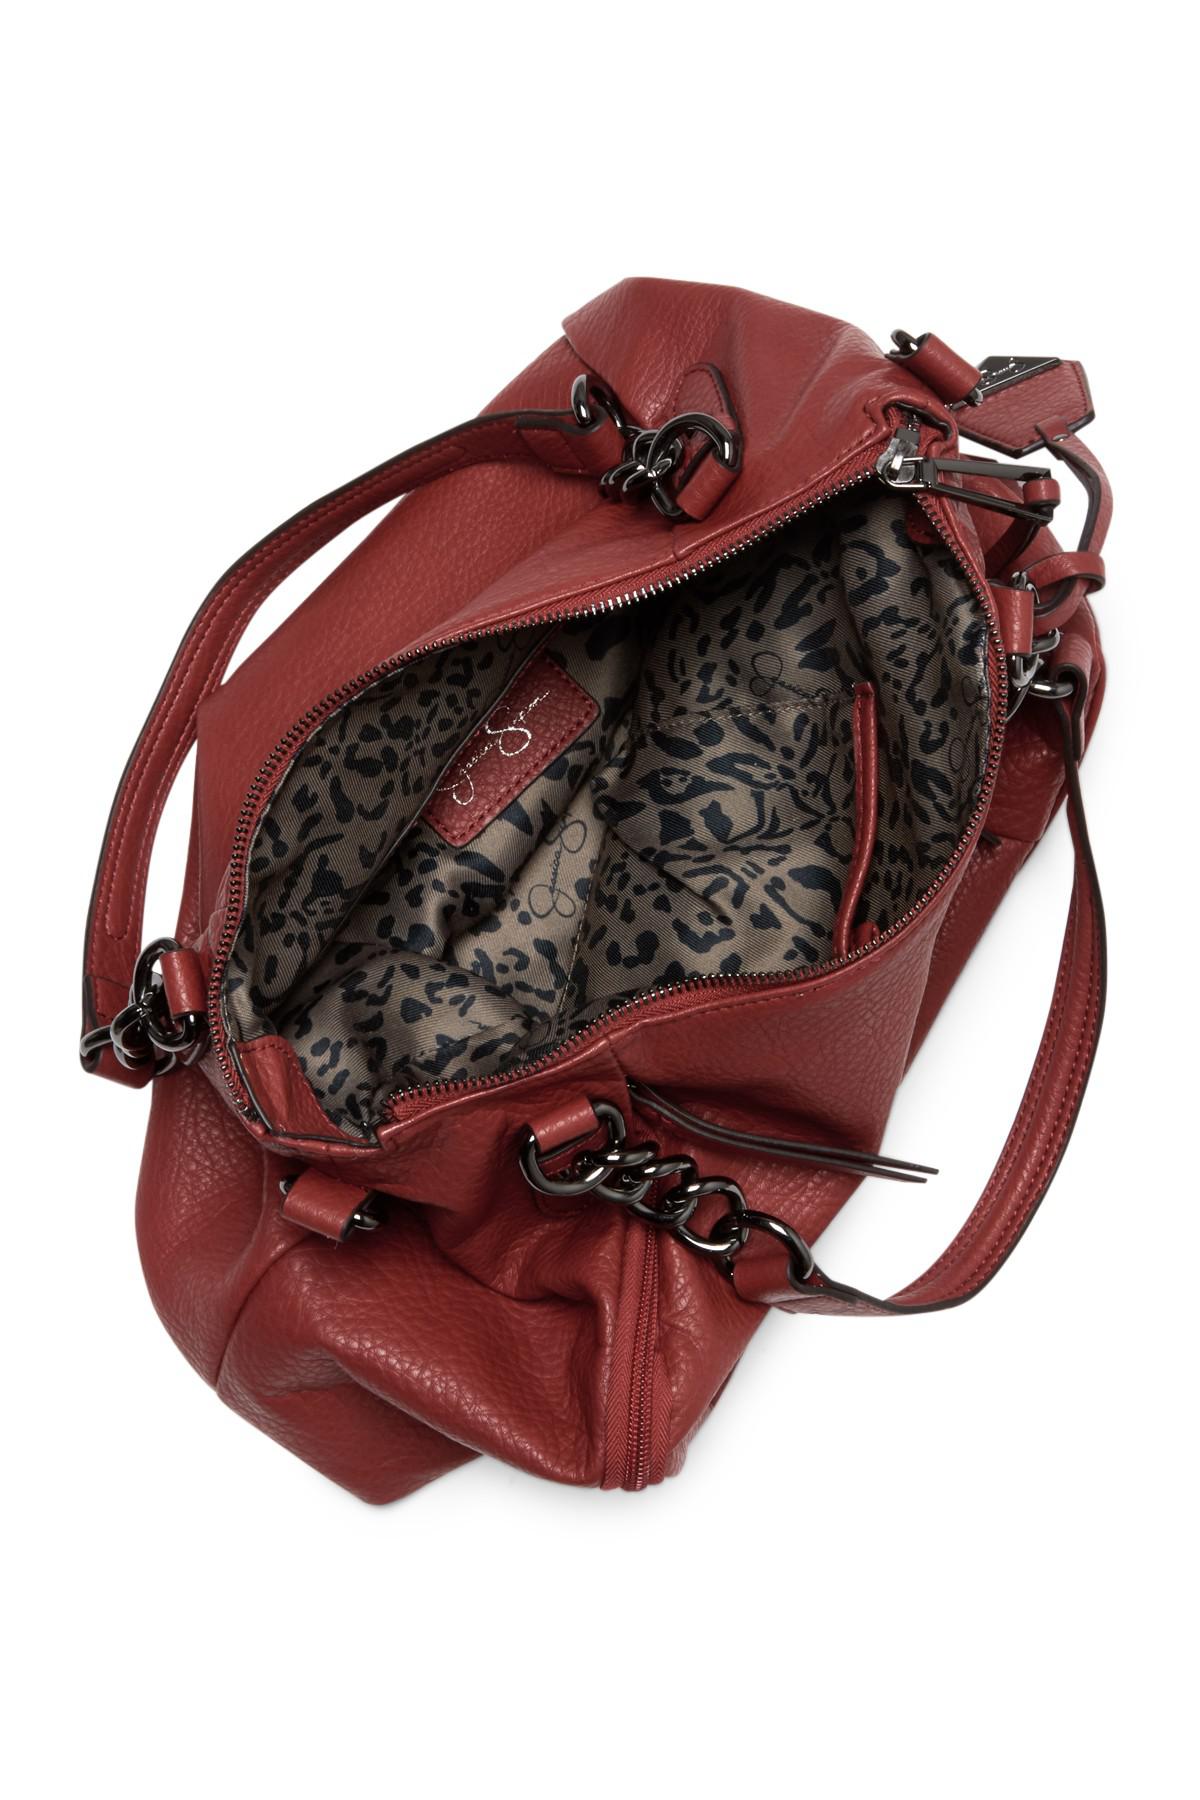 Jessica Simpson Vintage Handbag Large Leathet Shoulder Purse